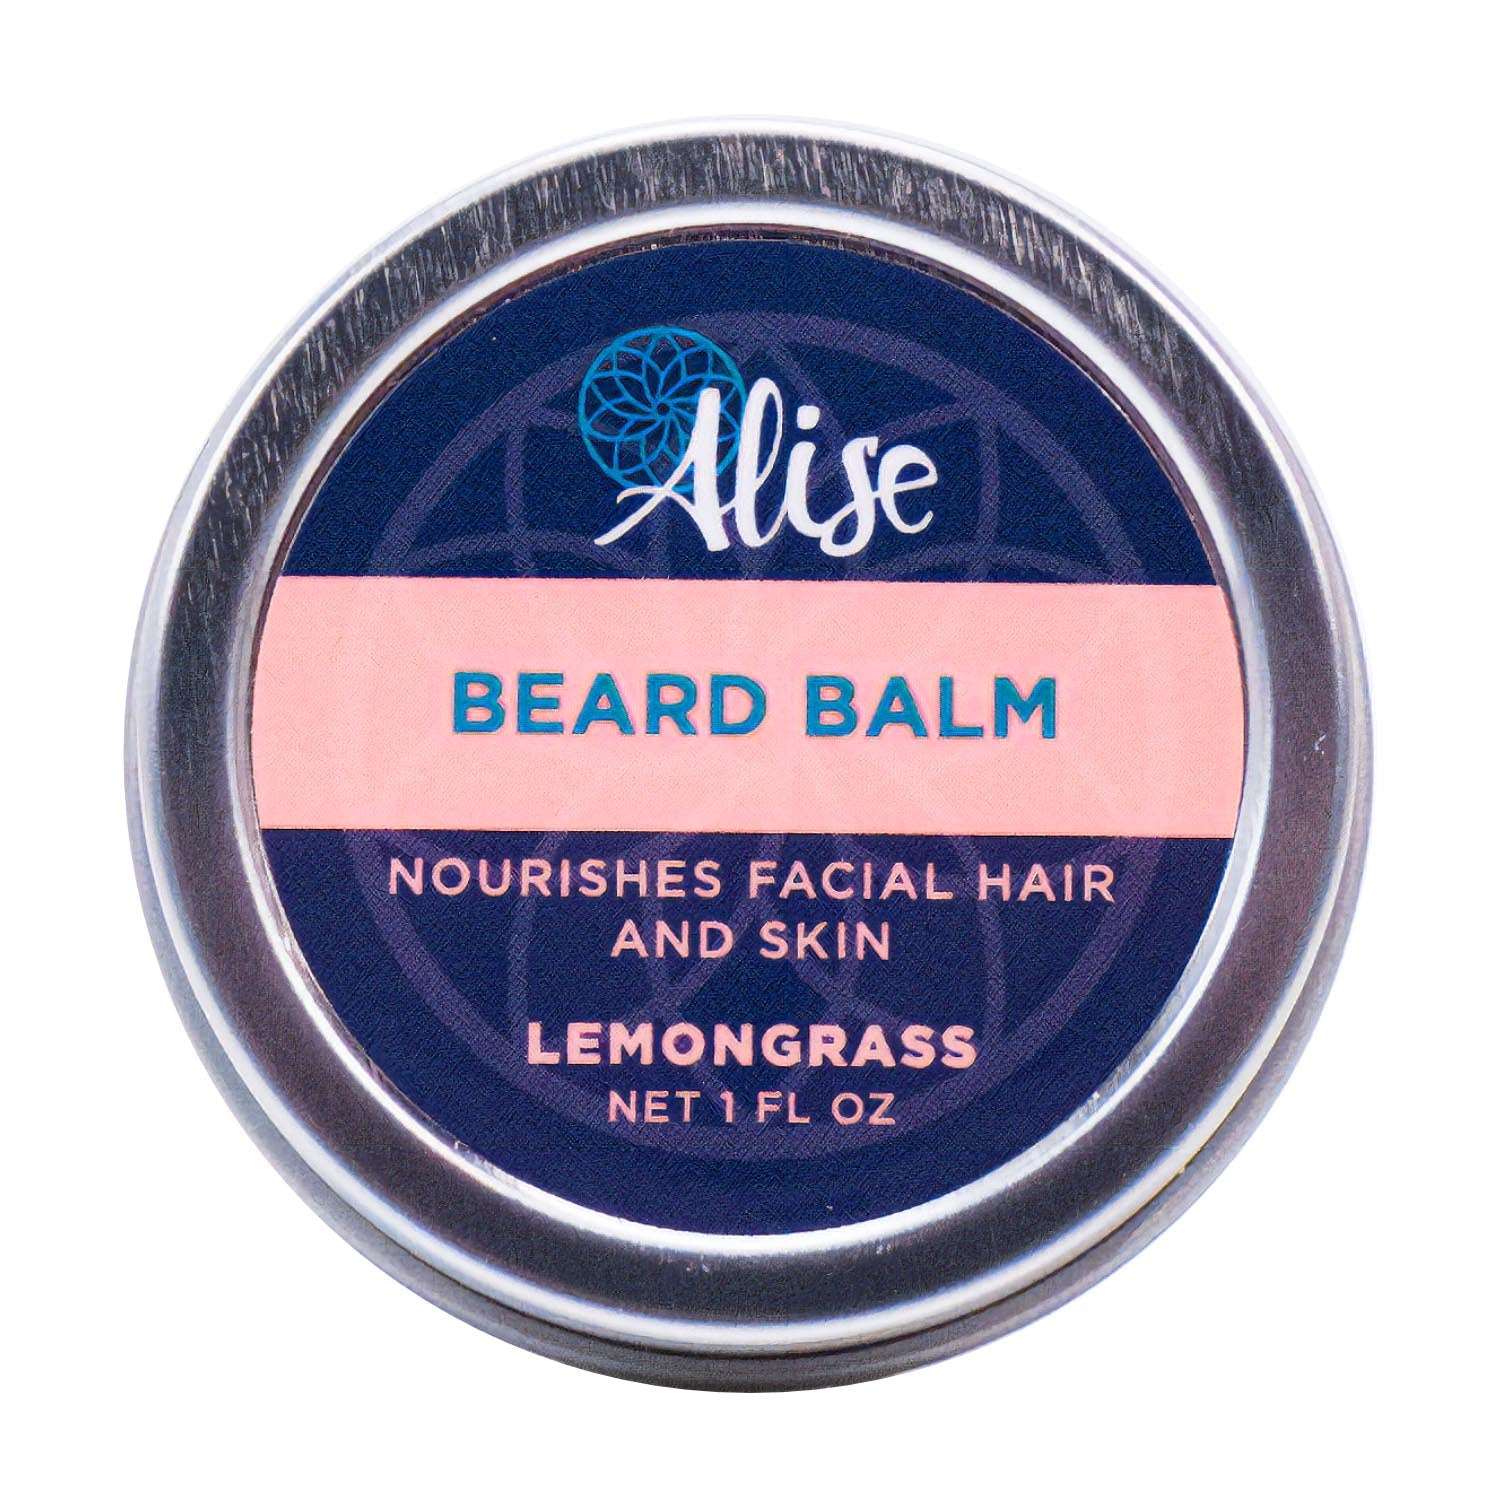 Beard Balm 1oz Lemongrass handcrafted by Alise Body Care